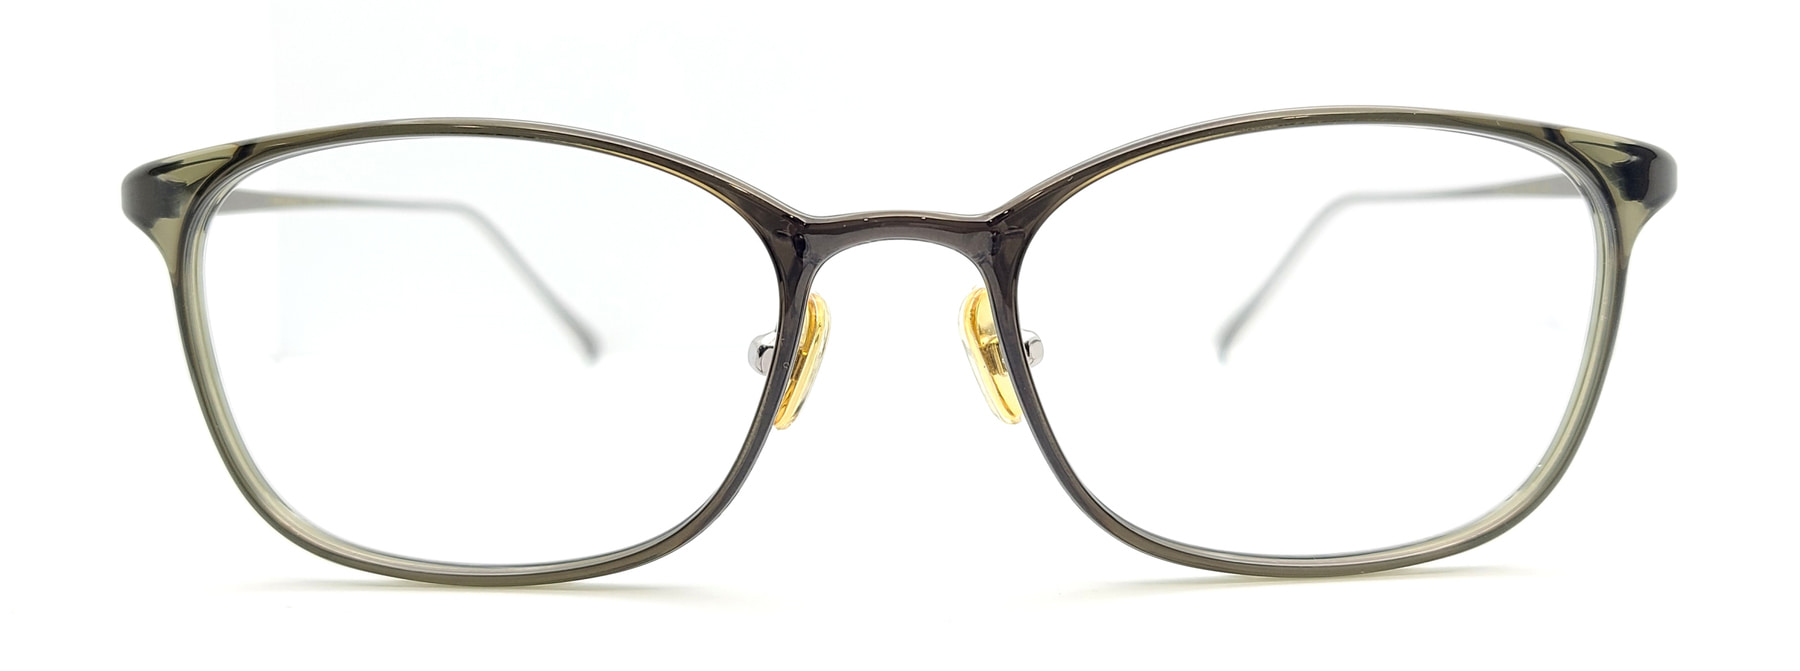 MINIHOUSE M-1428, Korean glasses, sunglasses, eyeglasses, glasses